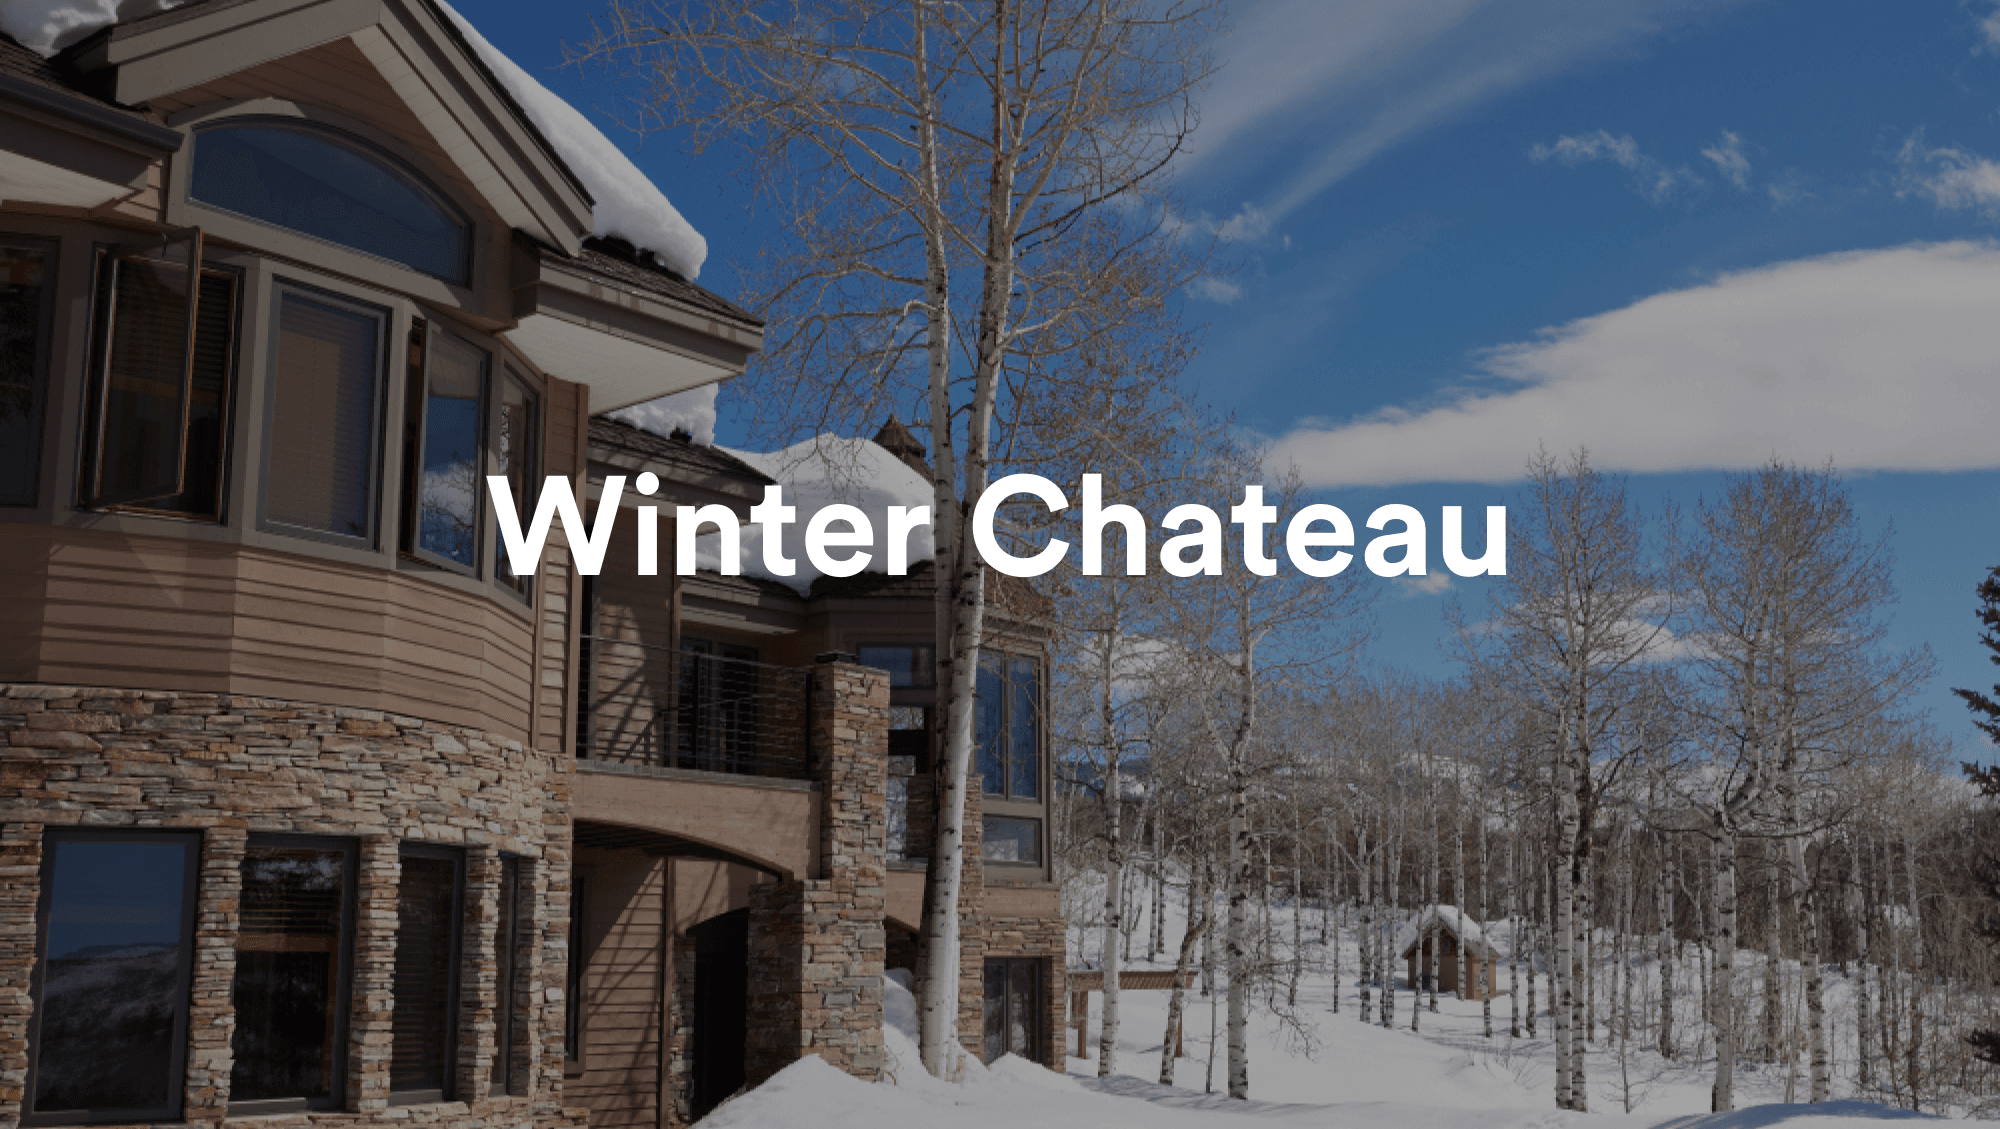 Winter Chateau - Shop Categories.png